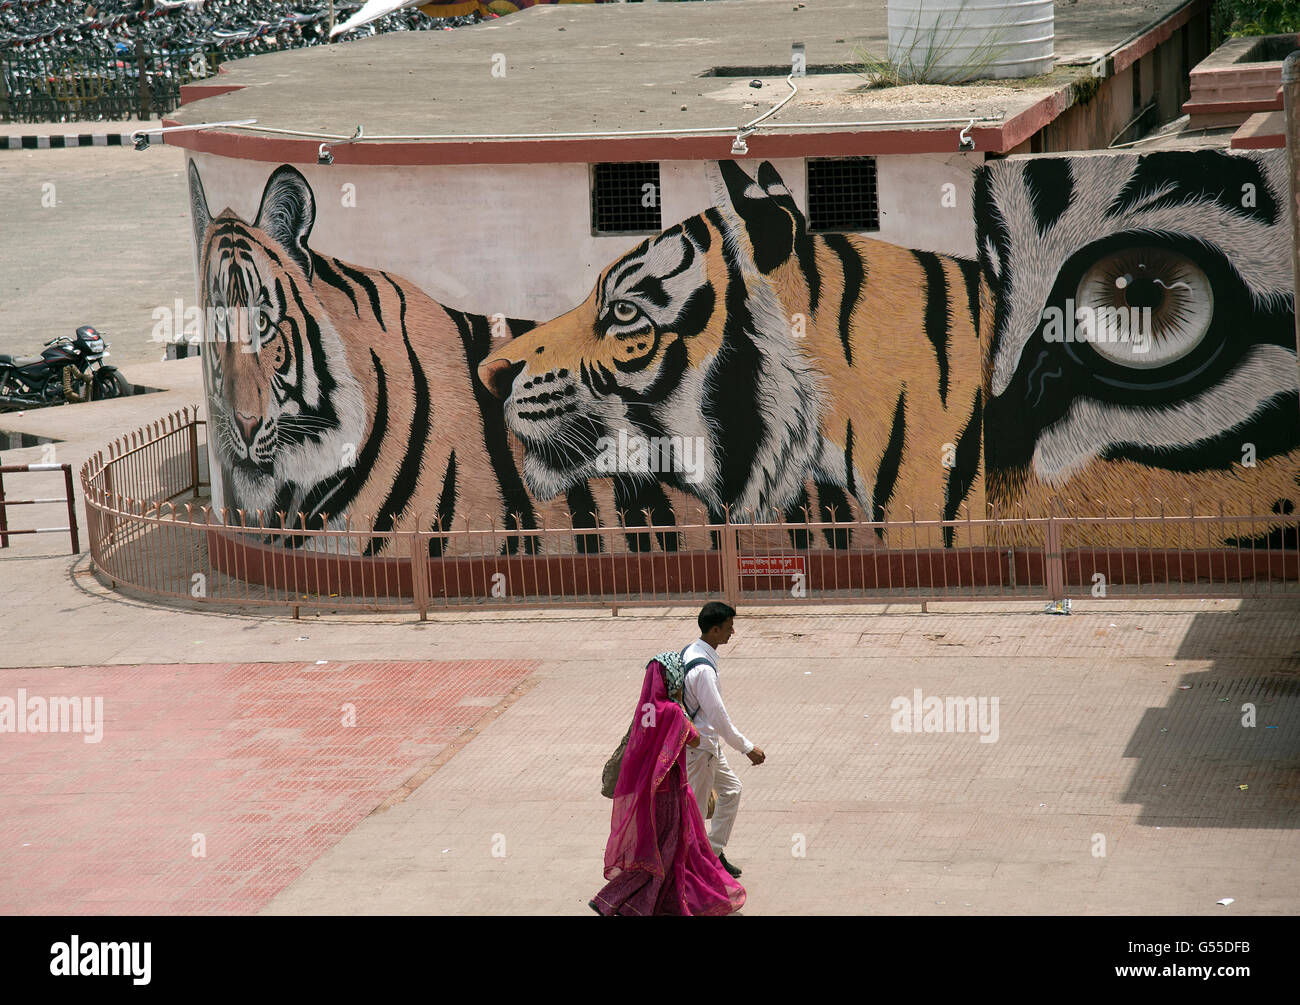 L'immagine della pittura è stata presa al Sawai Madhopur Railwau stazione, India Foto Stock